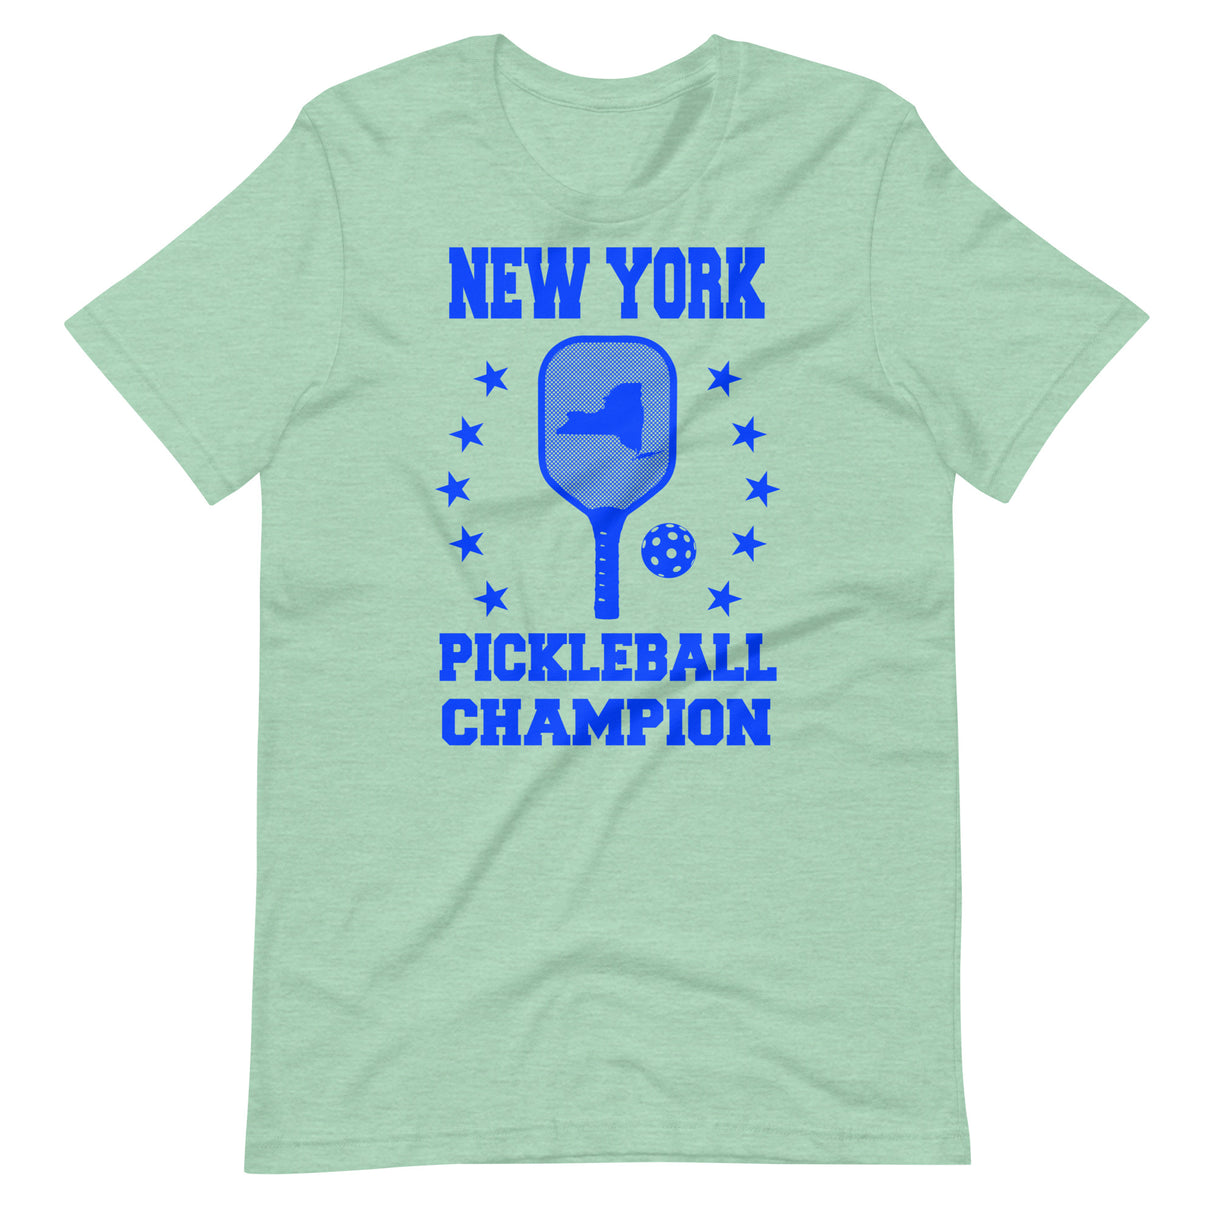 New York Pickleball Champion Shirt